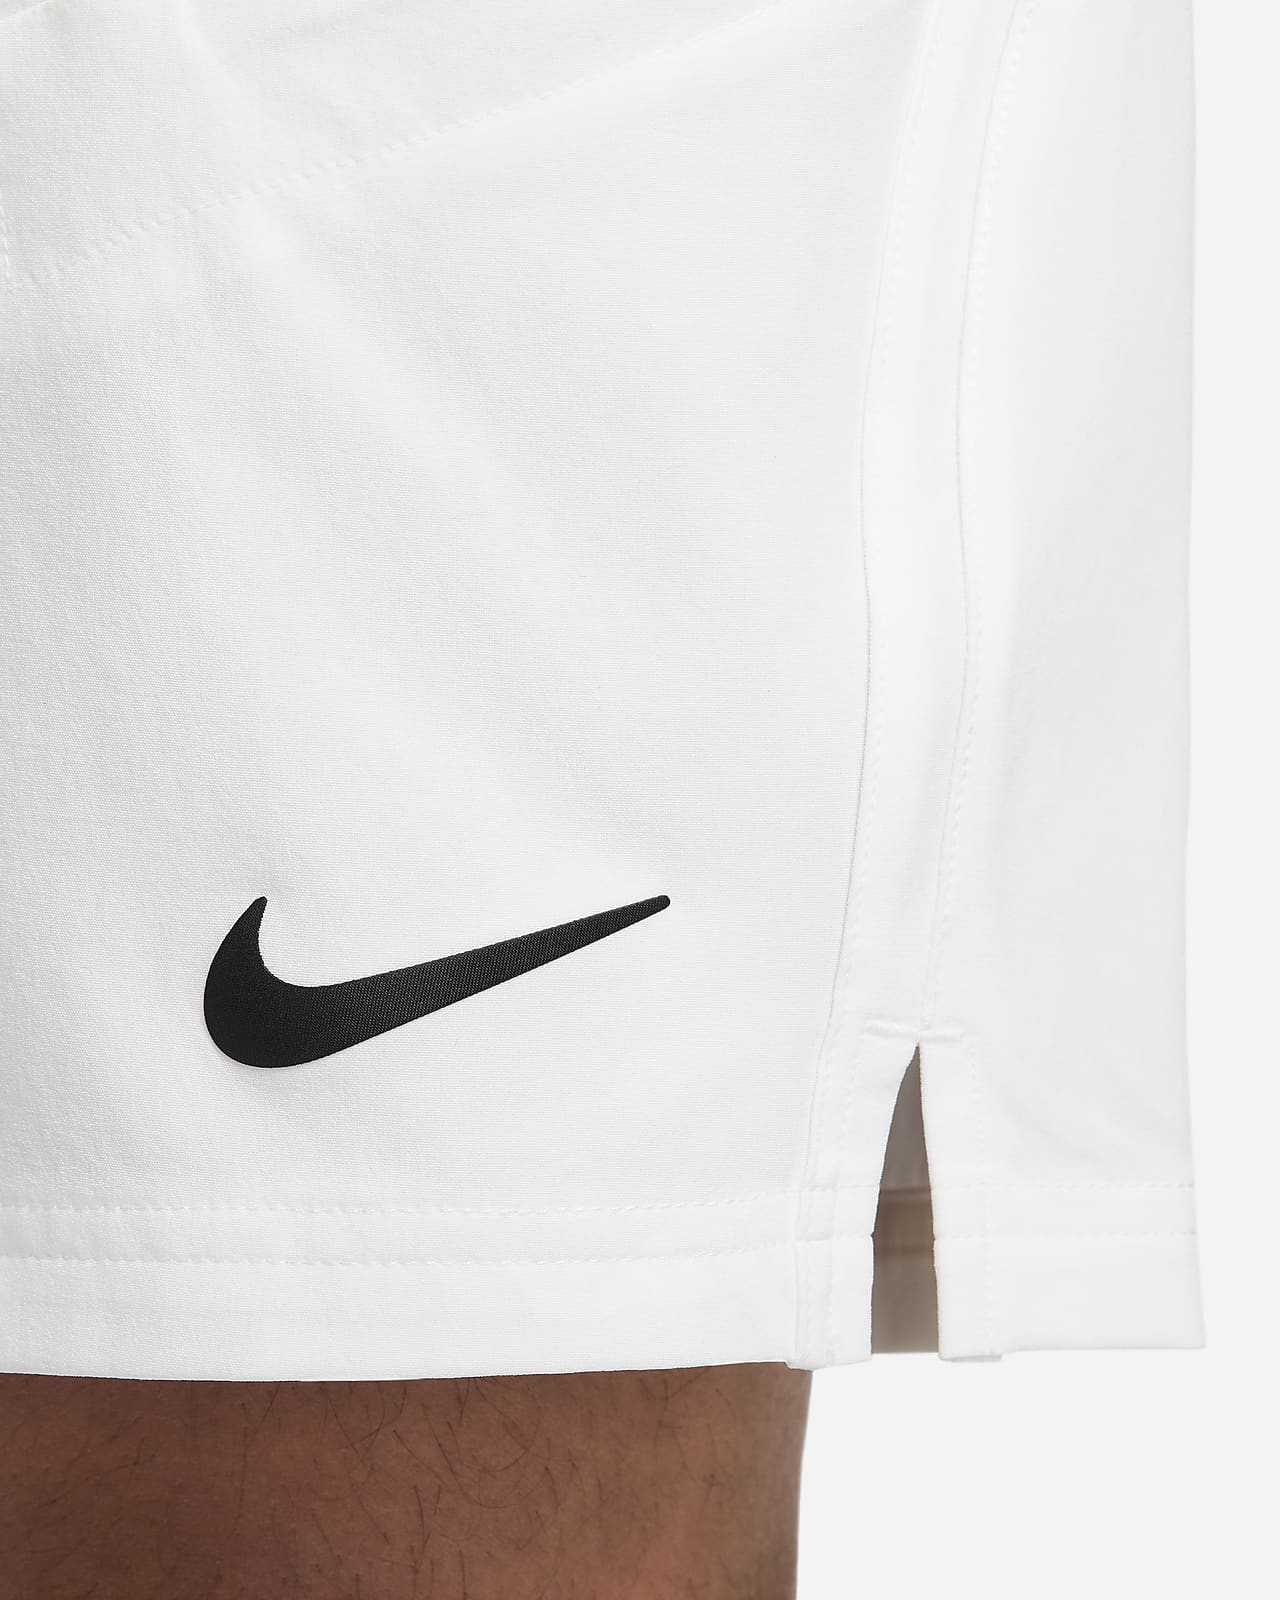 NikeCourt Advantage Men's Tennis Trousers. Nike CA